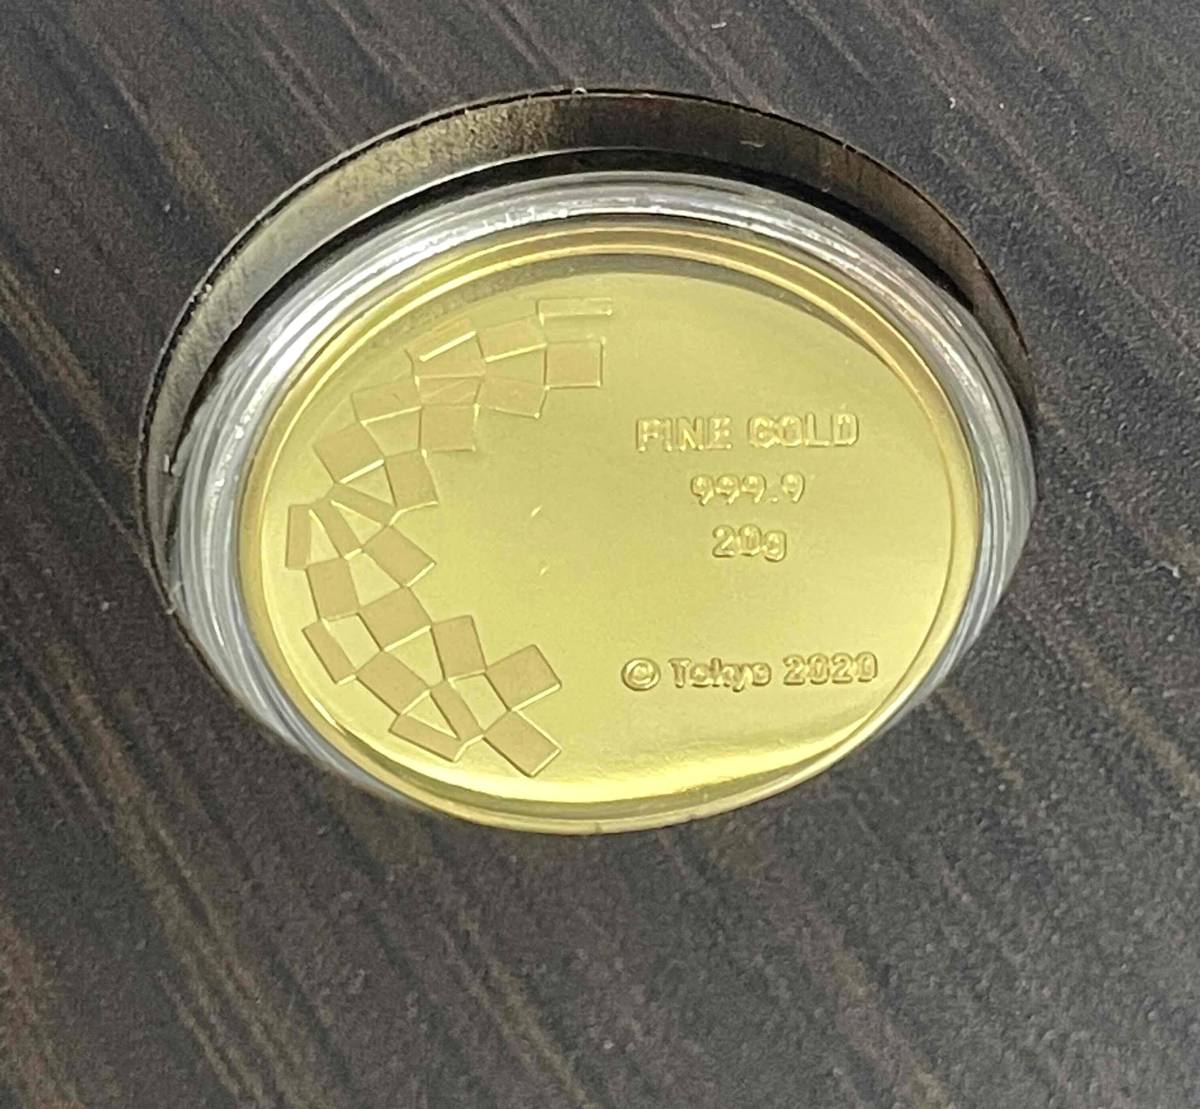 HX-15 東京オリンピック2020 純金純銀メダリオンセット 純金20g純銀30g TOKYO2020公式ライセンス商品 保証書付き 金貨 銀貨 の画像5